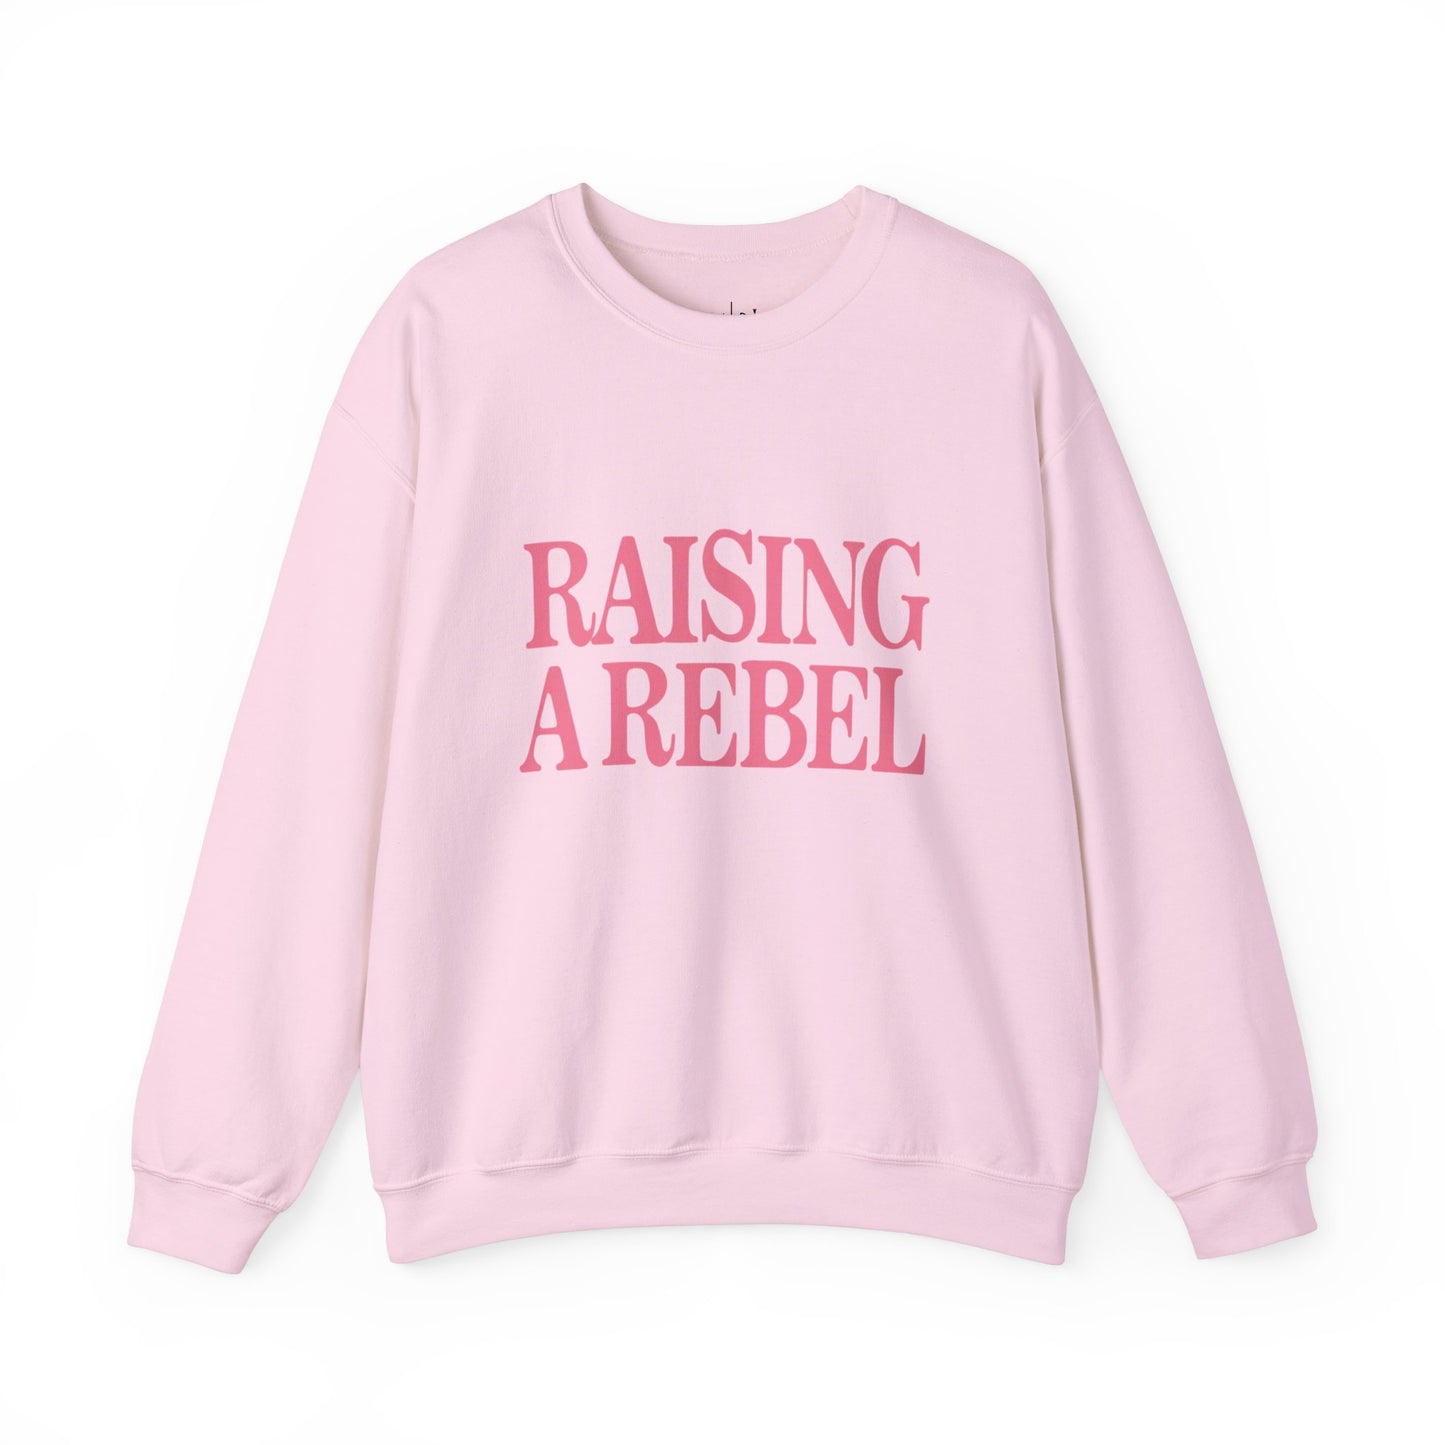 Raising A Rebel Adult Sweatshirt